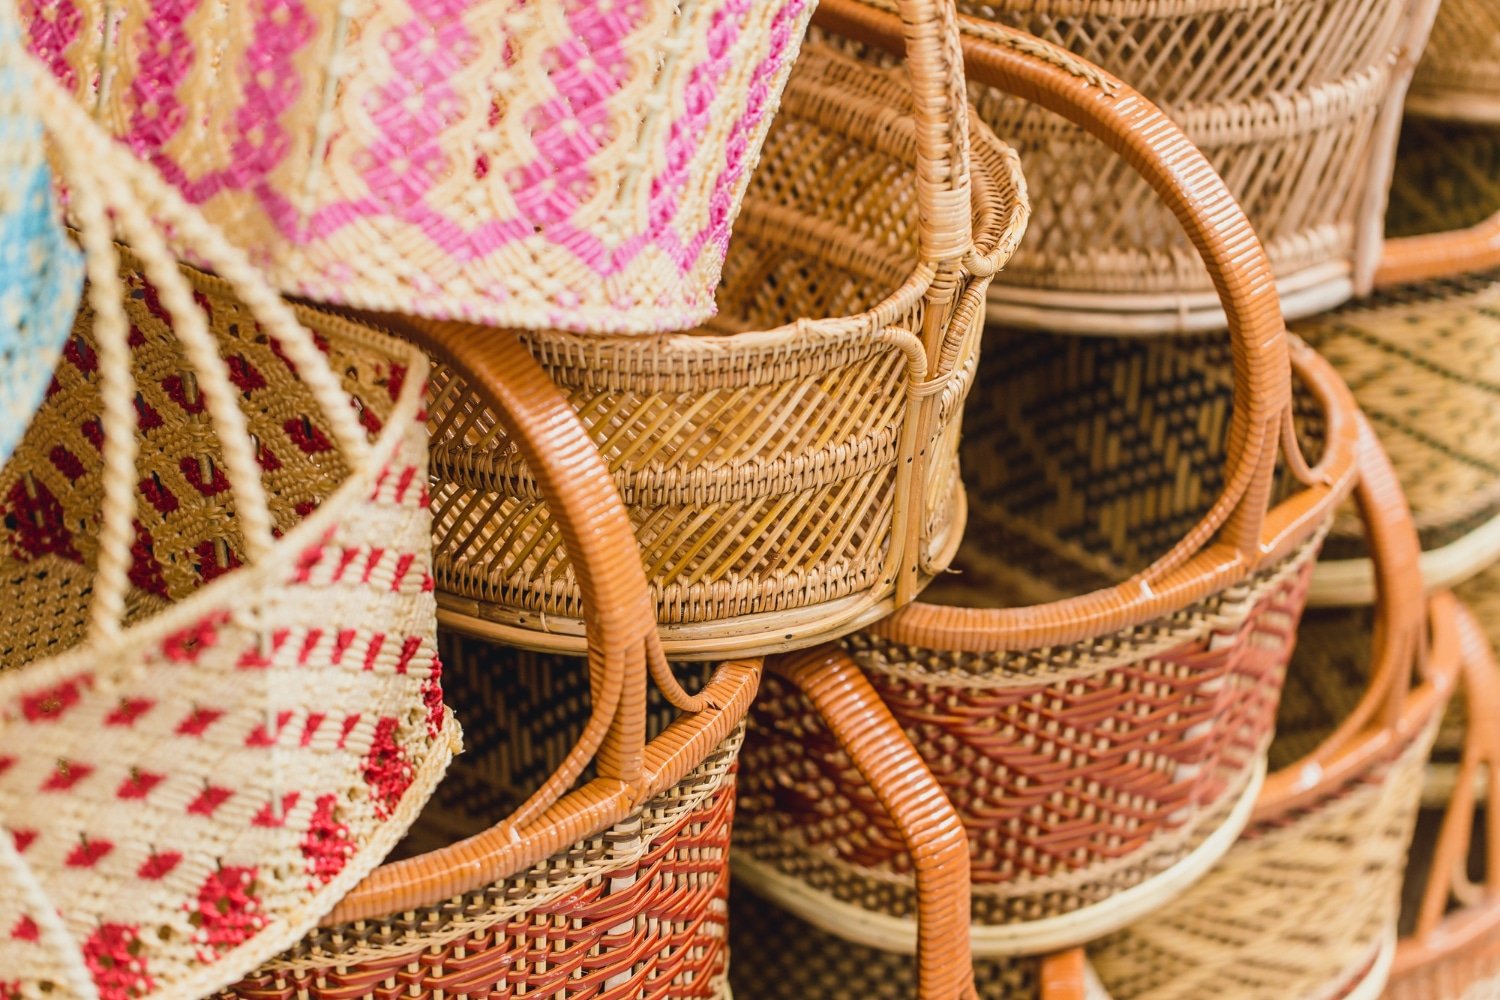 Woven Artisan Baskets and Decor